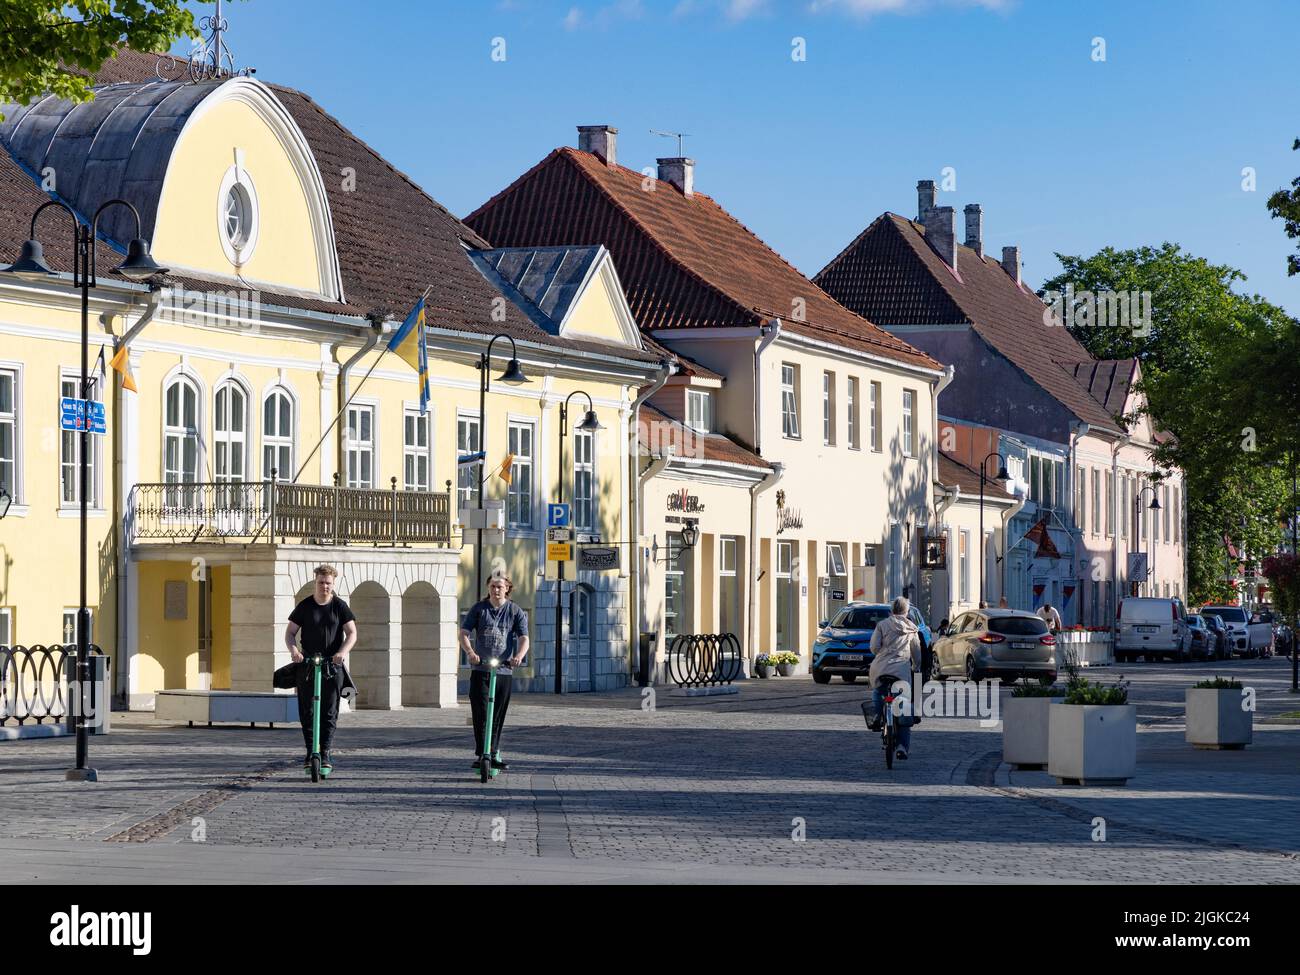 Kuressaare Estonia; scena di strada al mattino presto, con persone ed edifici, centro di Kuressaare, Kuressaare Saaremaa, Estonia Europa. Foto Stock